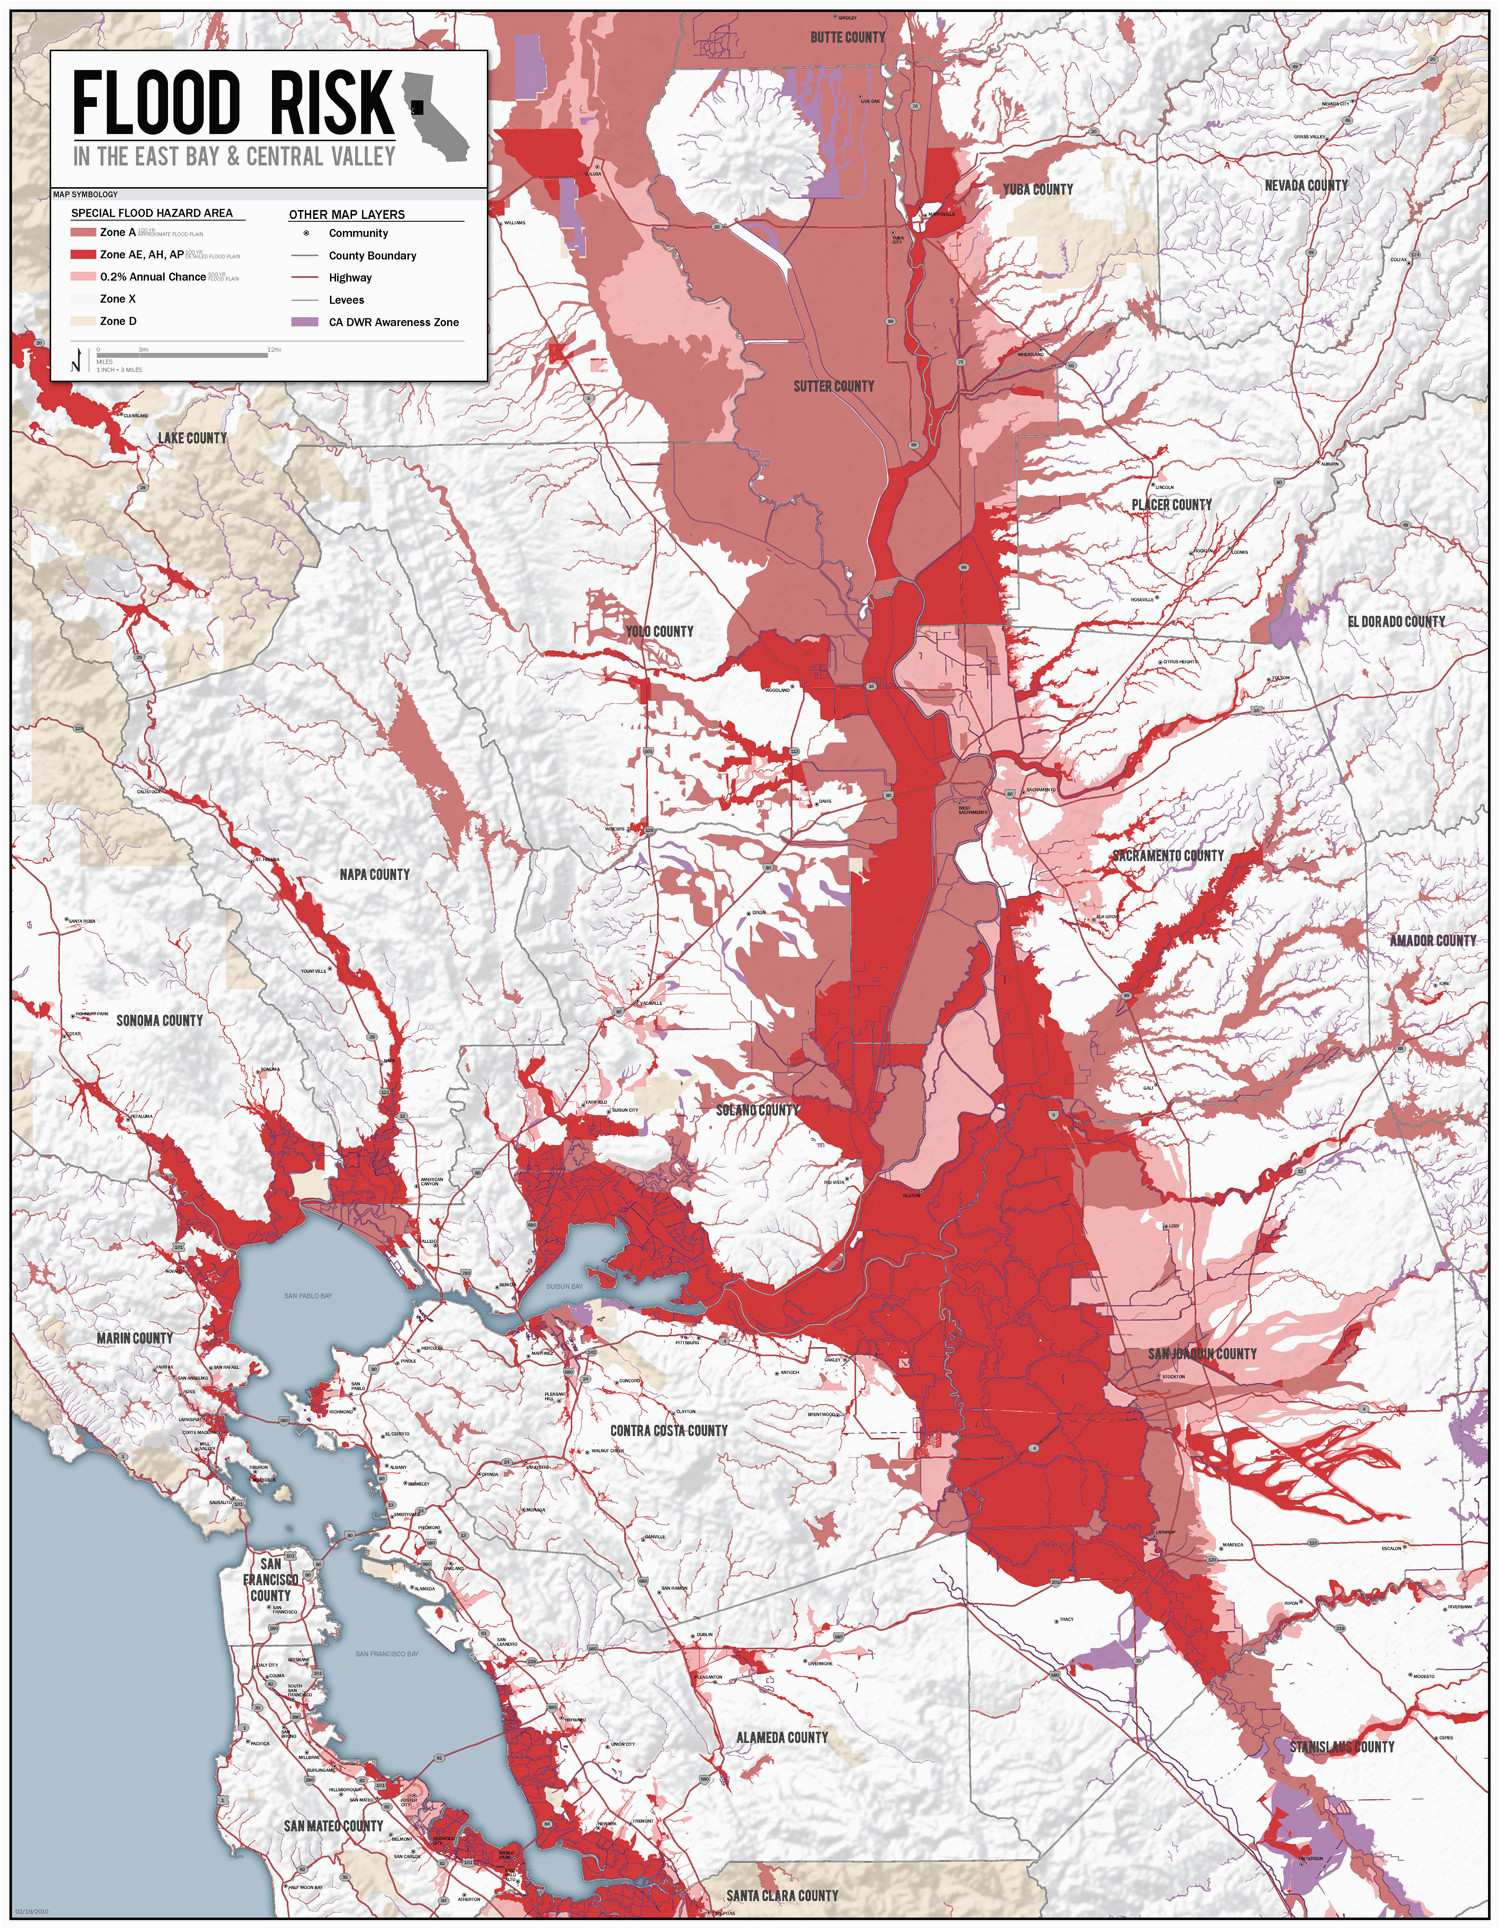 California Flood Zone Map Flood Area Map Luxury California Flood Map Etiforum Maps Directions Of California Flood Zone Map 1 